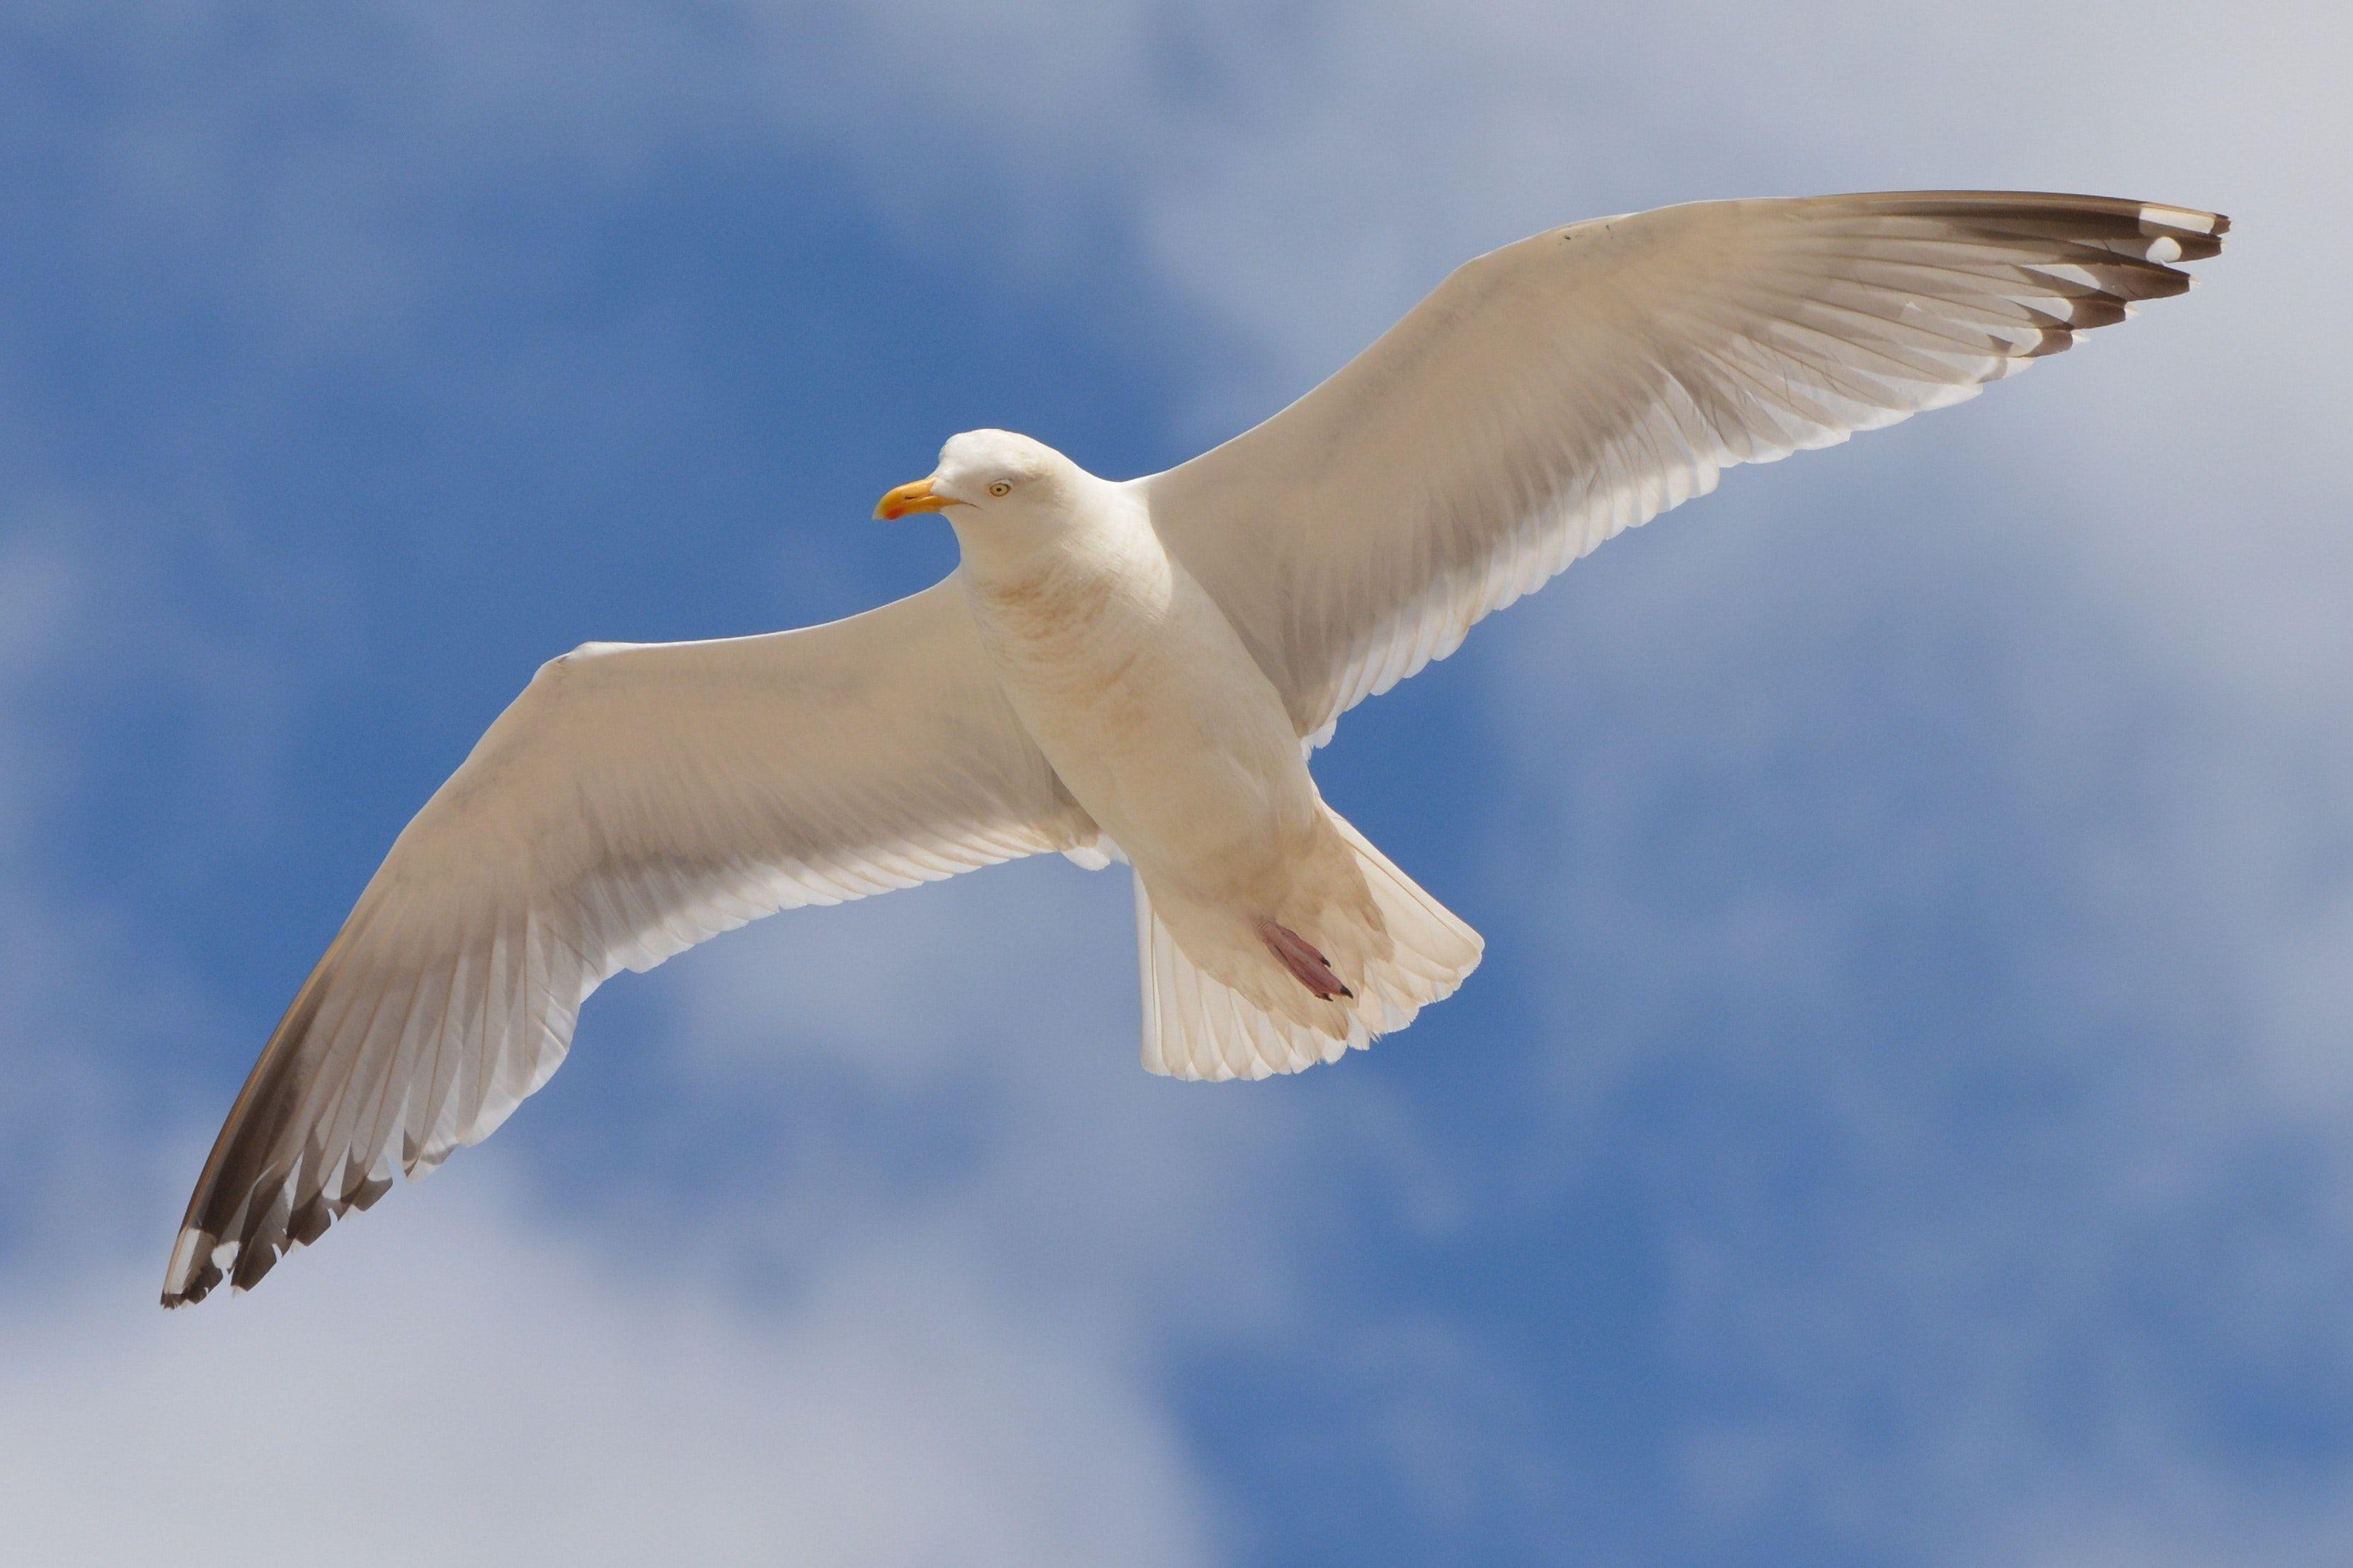 Blue White Bird Logo - White Bird Flying Under the Blue and White Sky during Daytime · Free ...